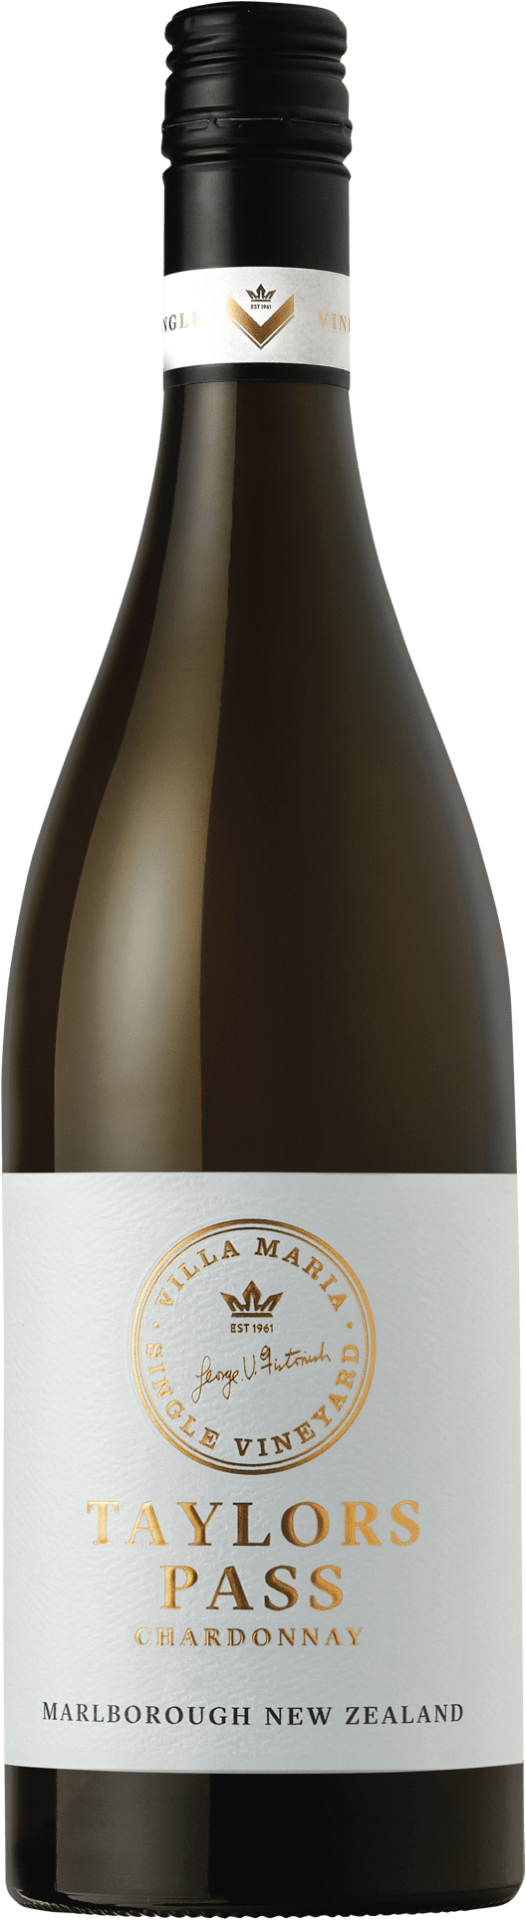 Taylors Pass Single Vineyard Chardonnay